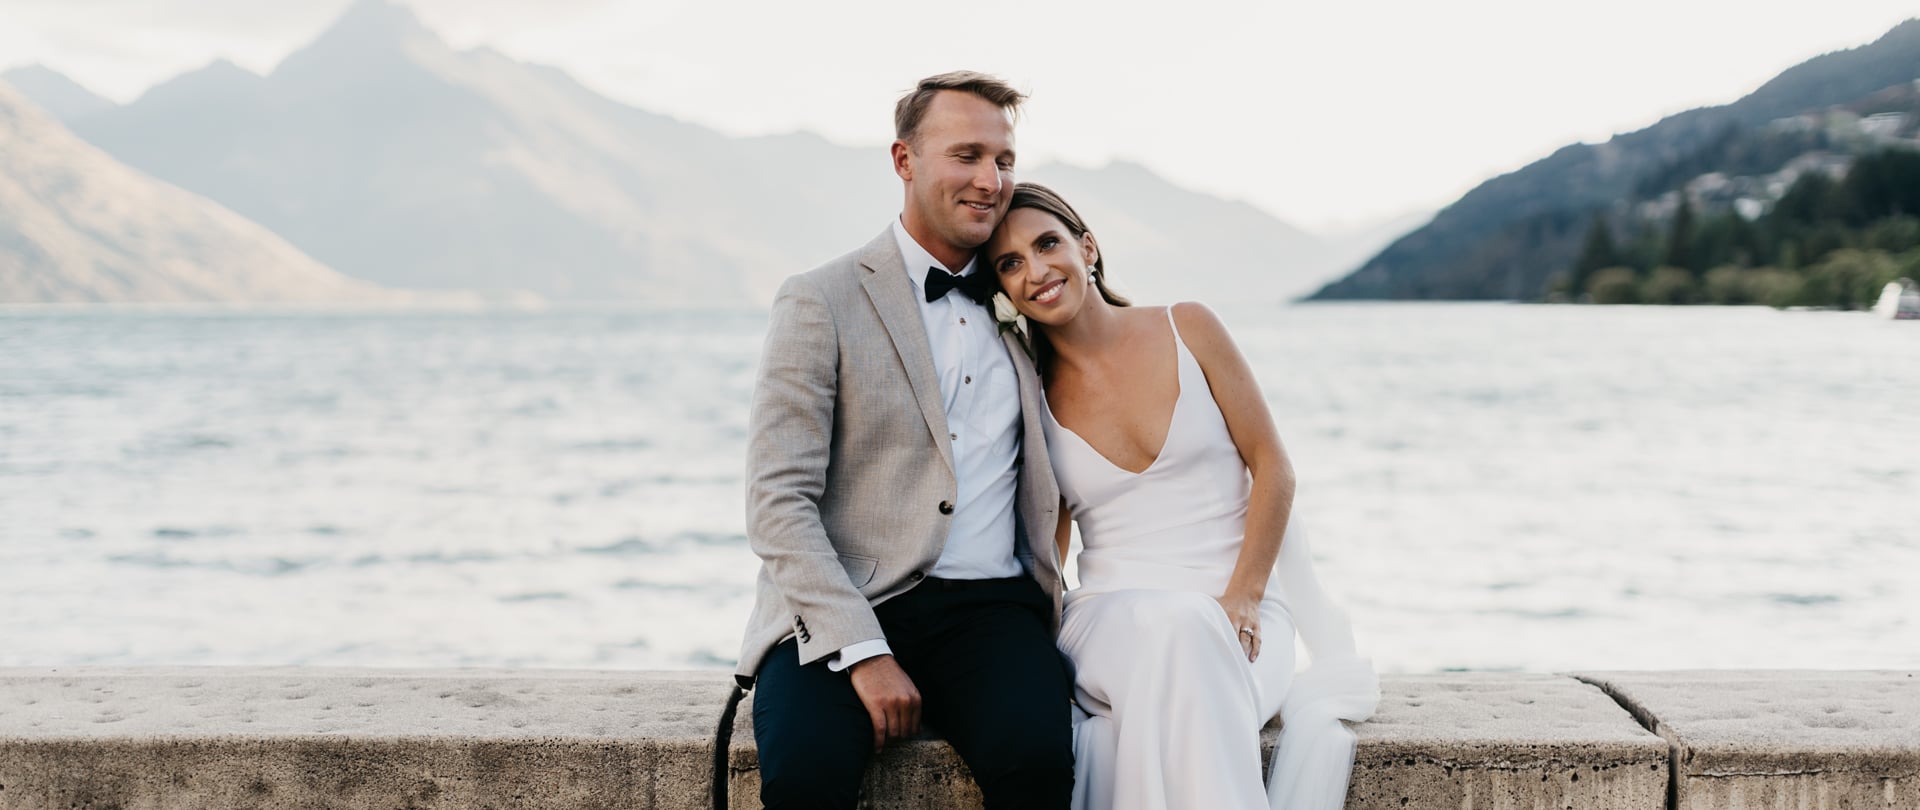 Jess & Rob Wedding Video Filmed at Queenstown, New Zealand